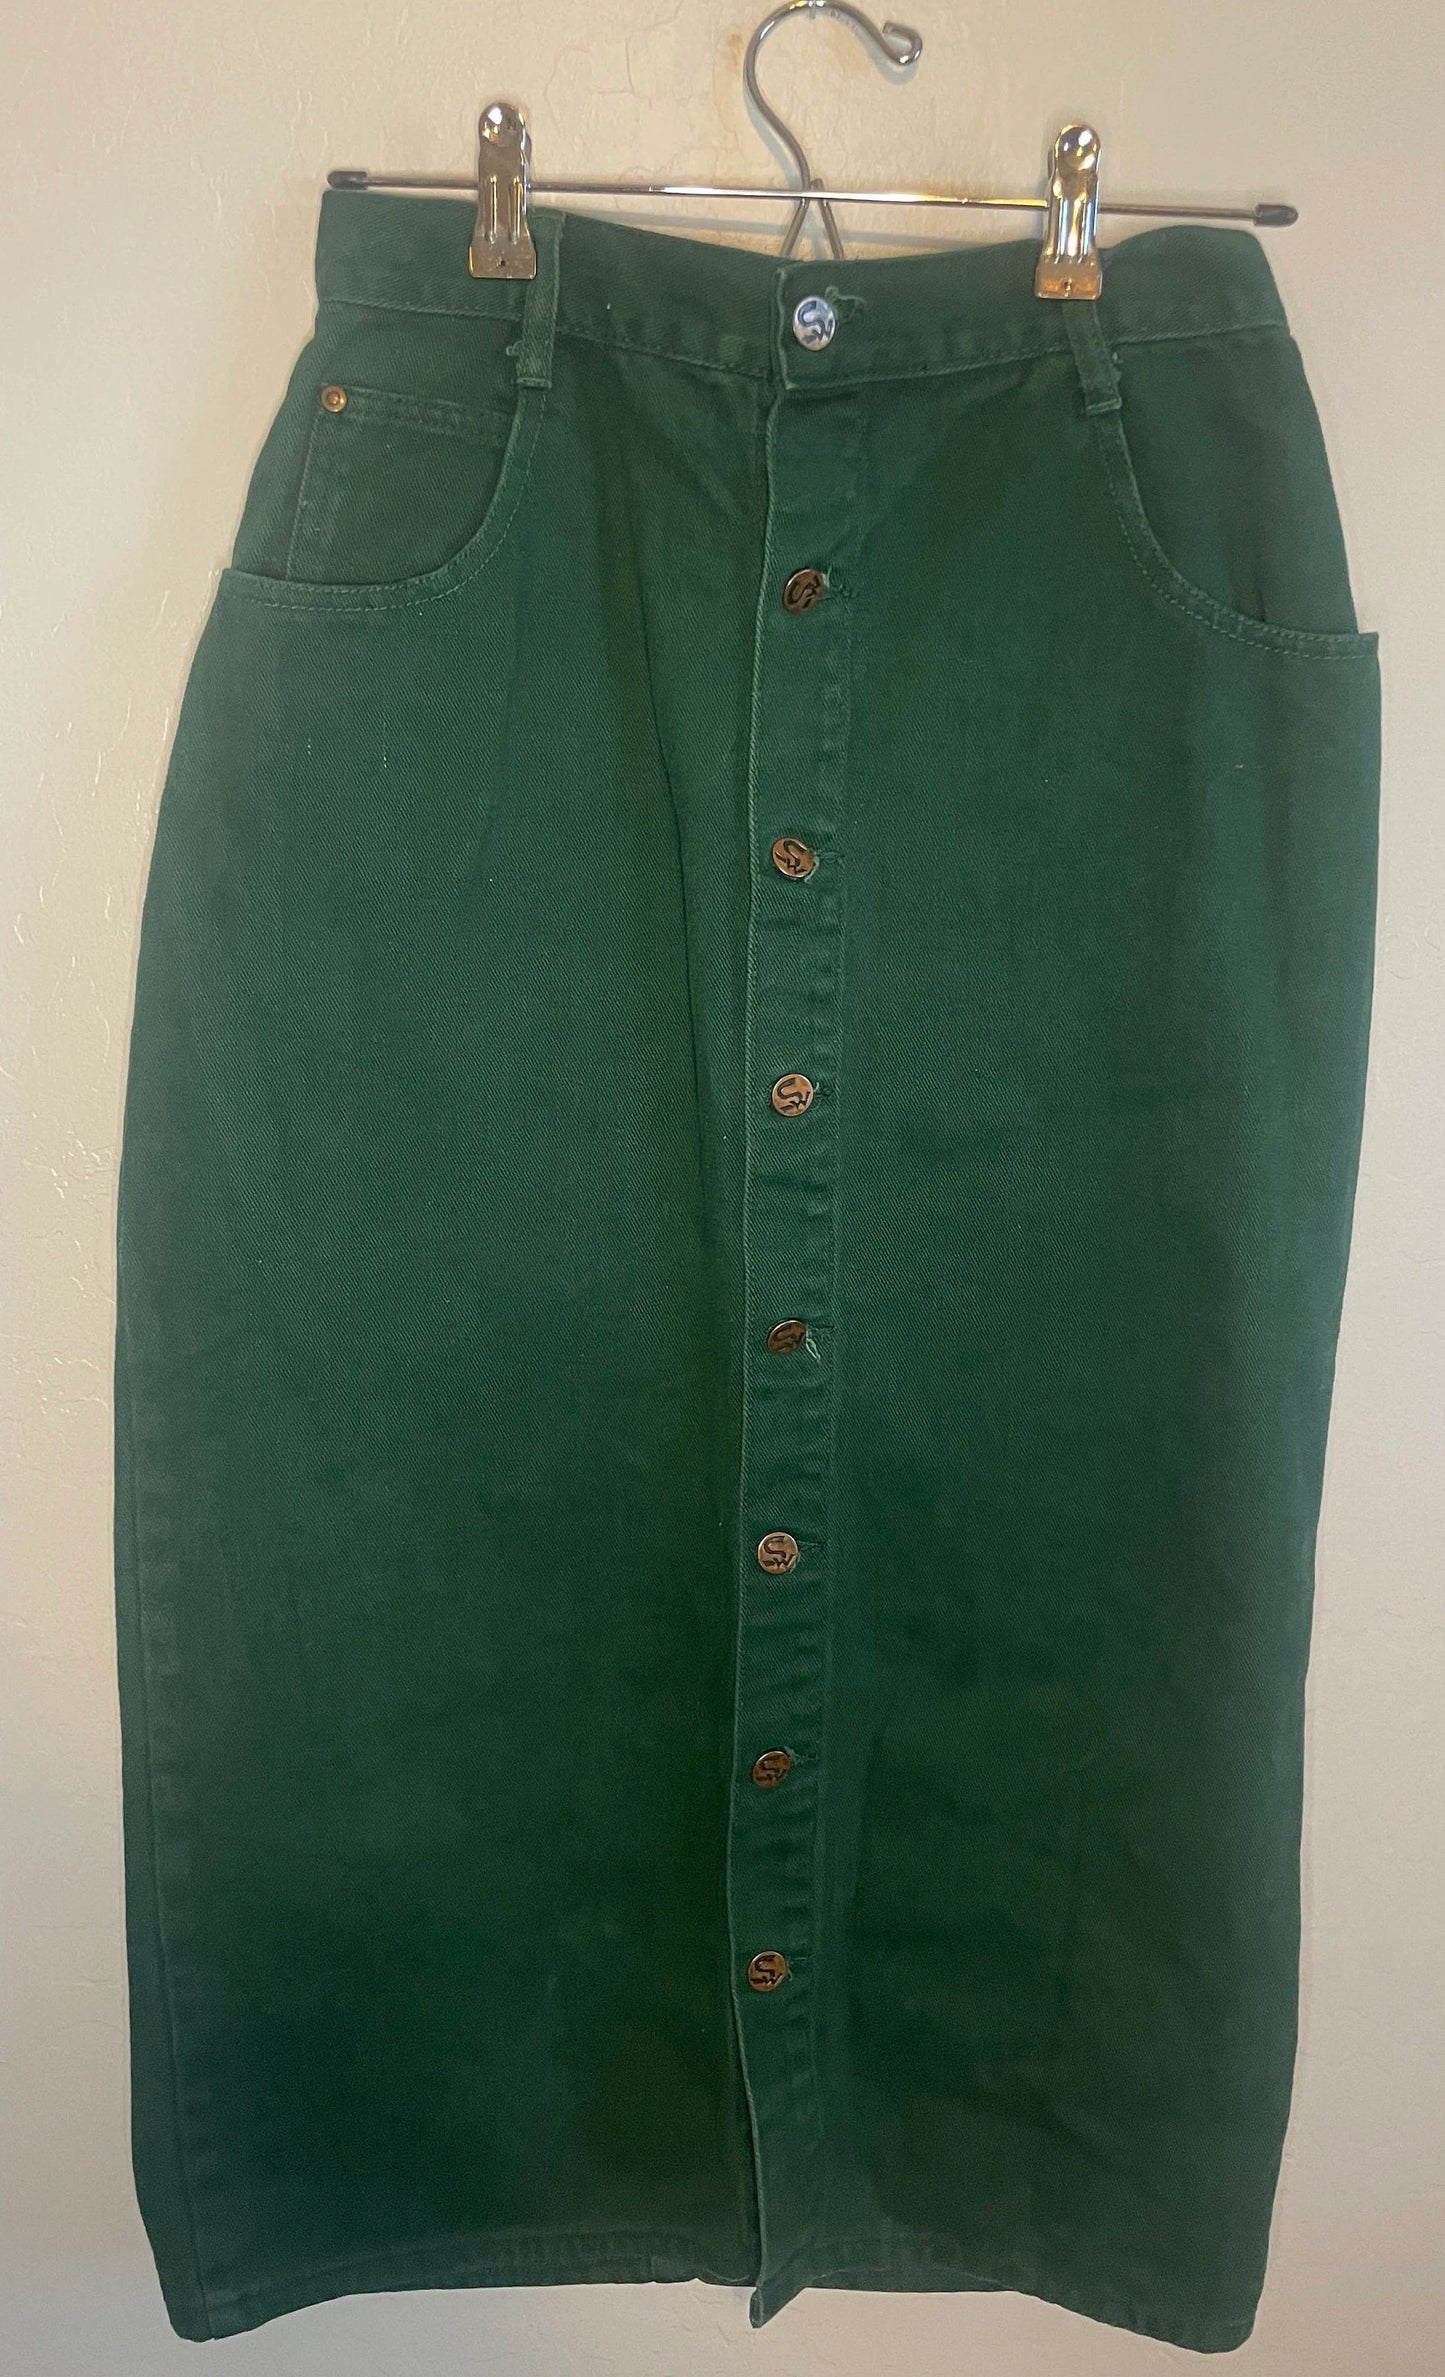 Vintage High Waisted Green Denim Skirt